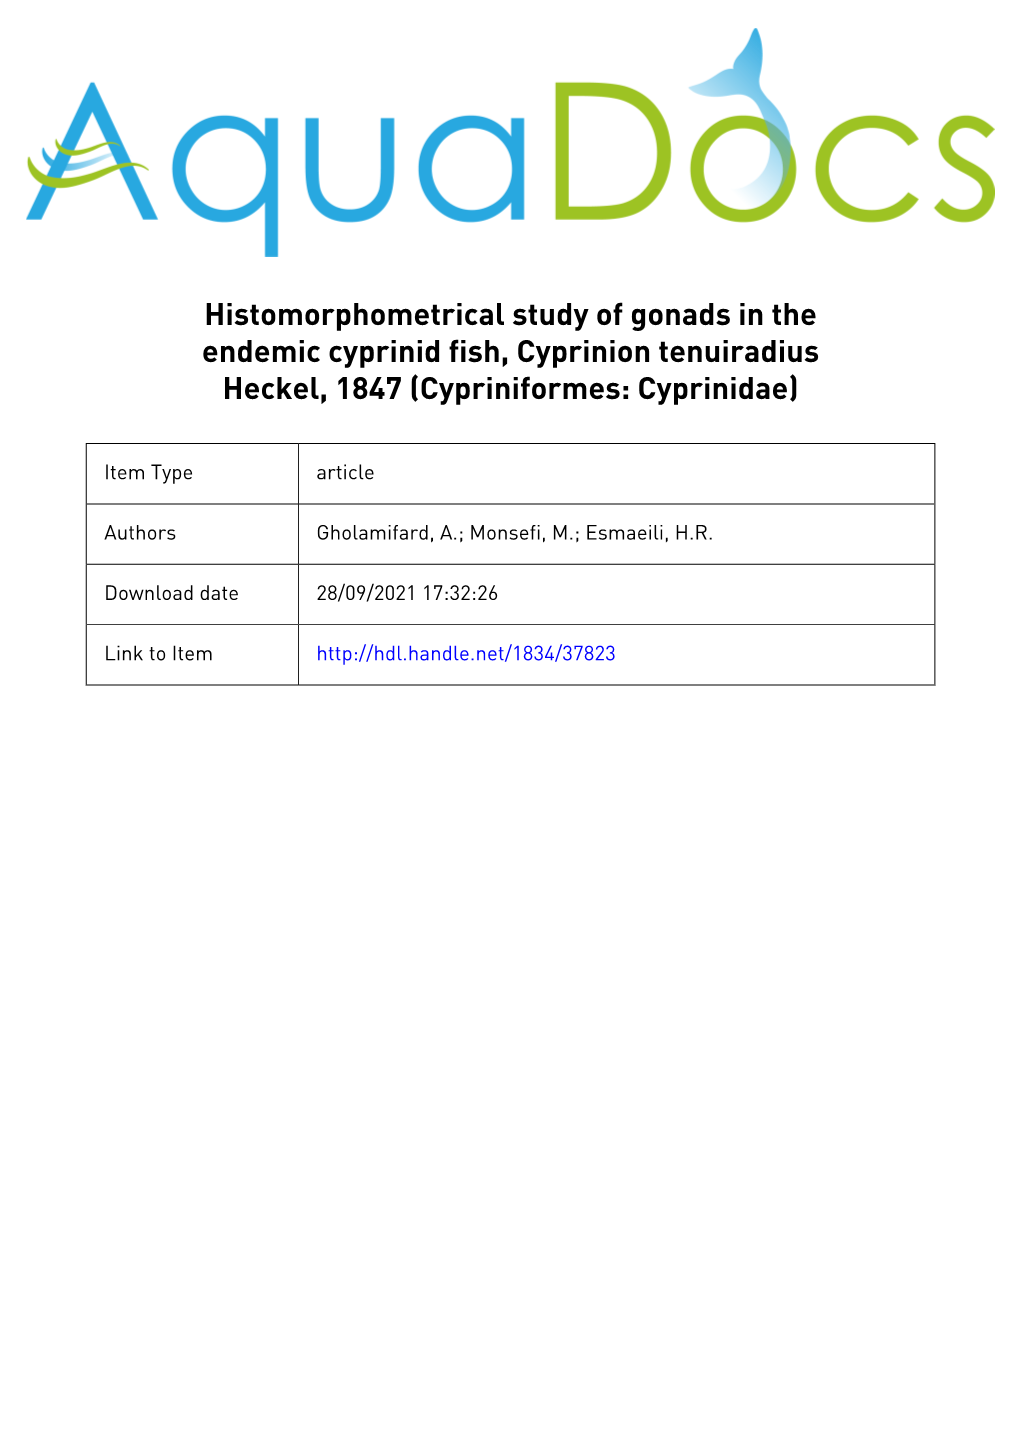 Histomorphometrical Study of Gonads in the Endemic Cyprinid Fish, Cyprinion Tenuiradius Heckel, 1847 (Cypriniformes: Cyprinidae)